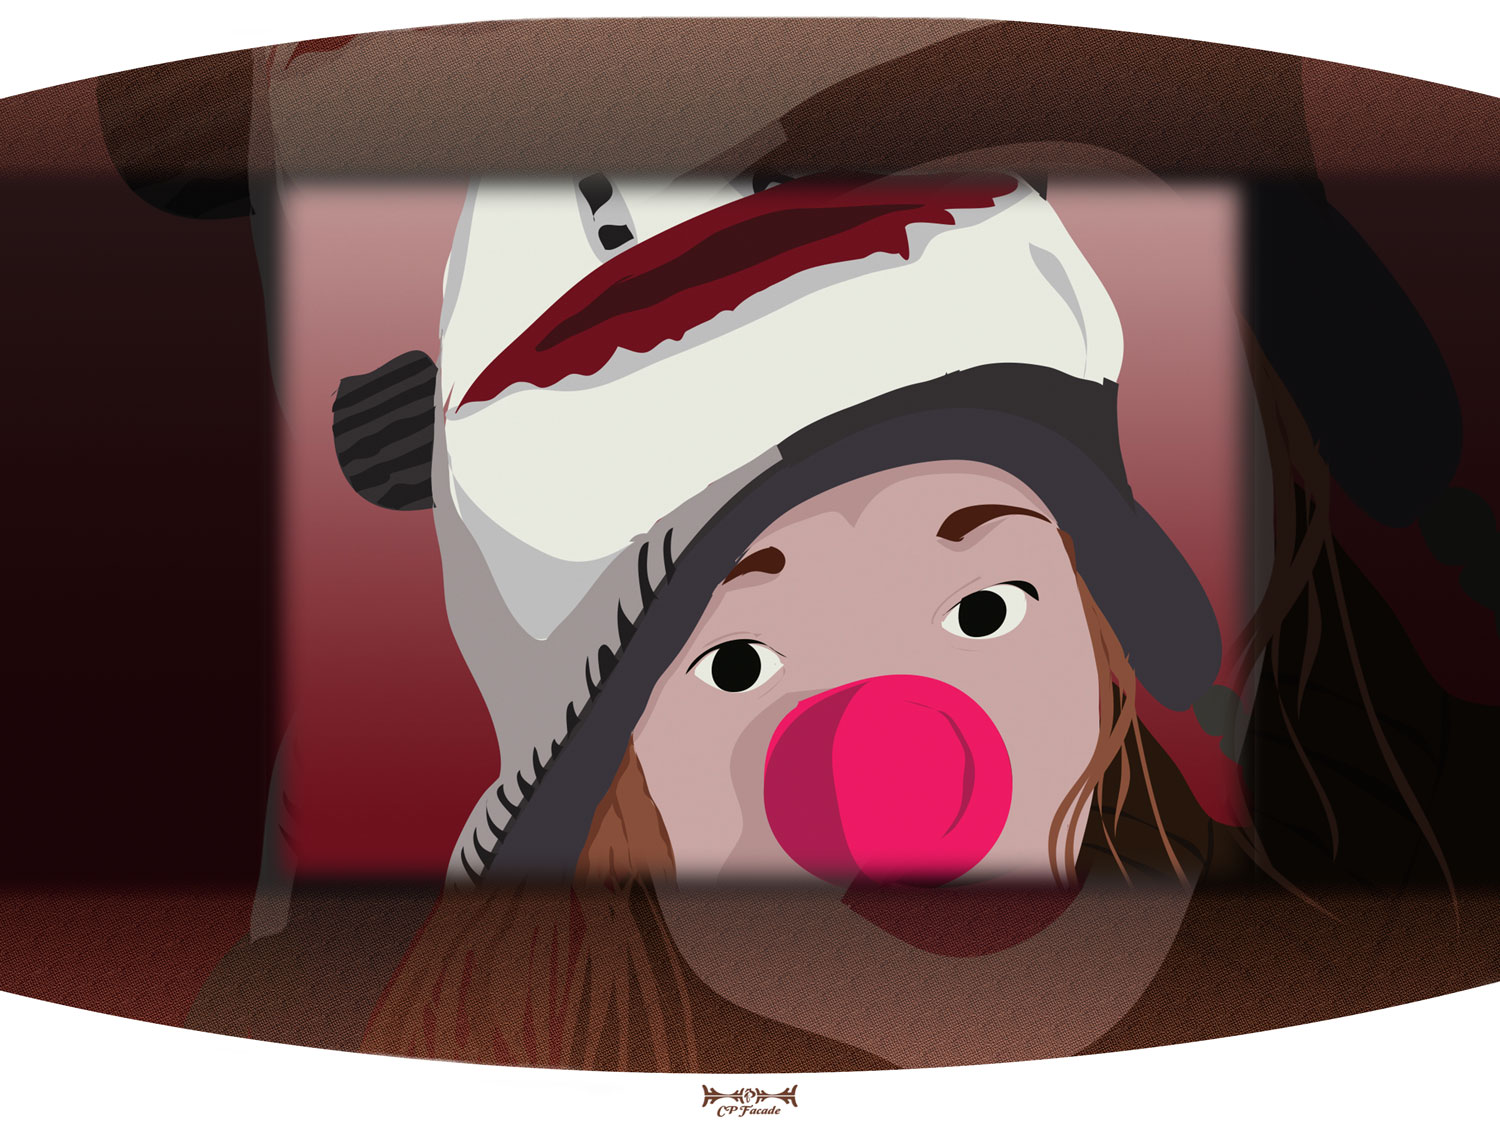 Custom Illustration of girl in a clown nose wearing a cute monkey hat